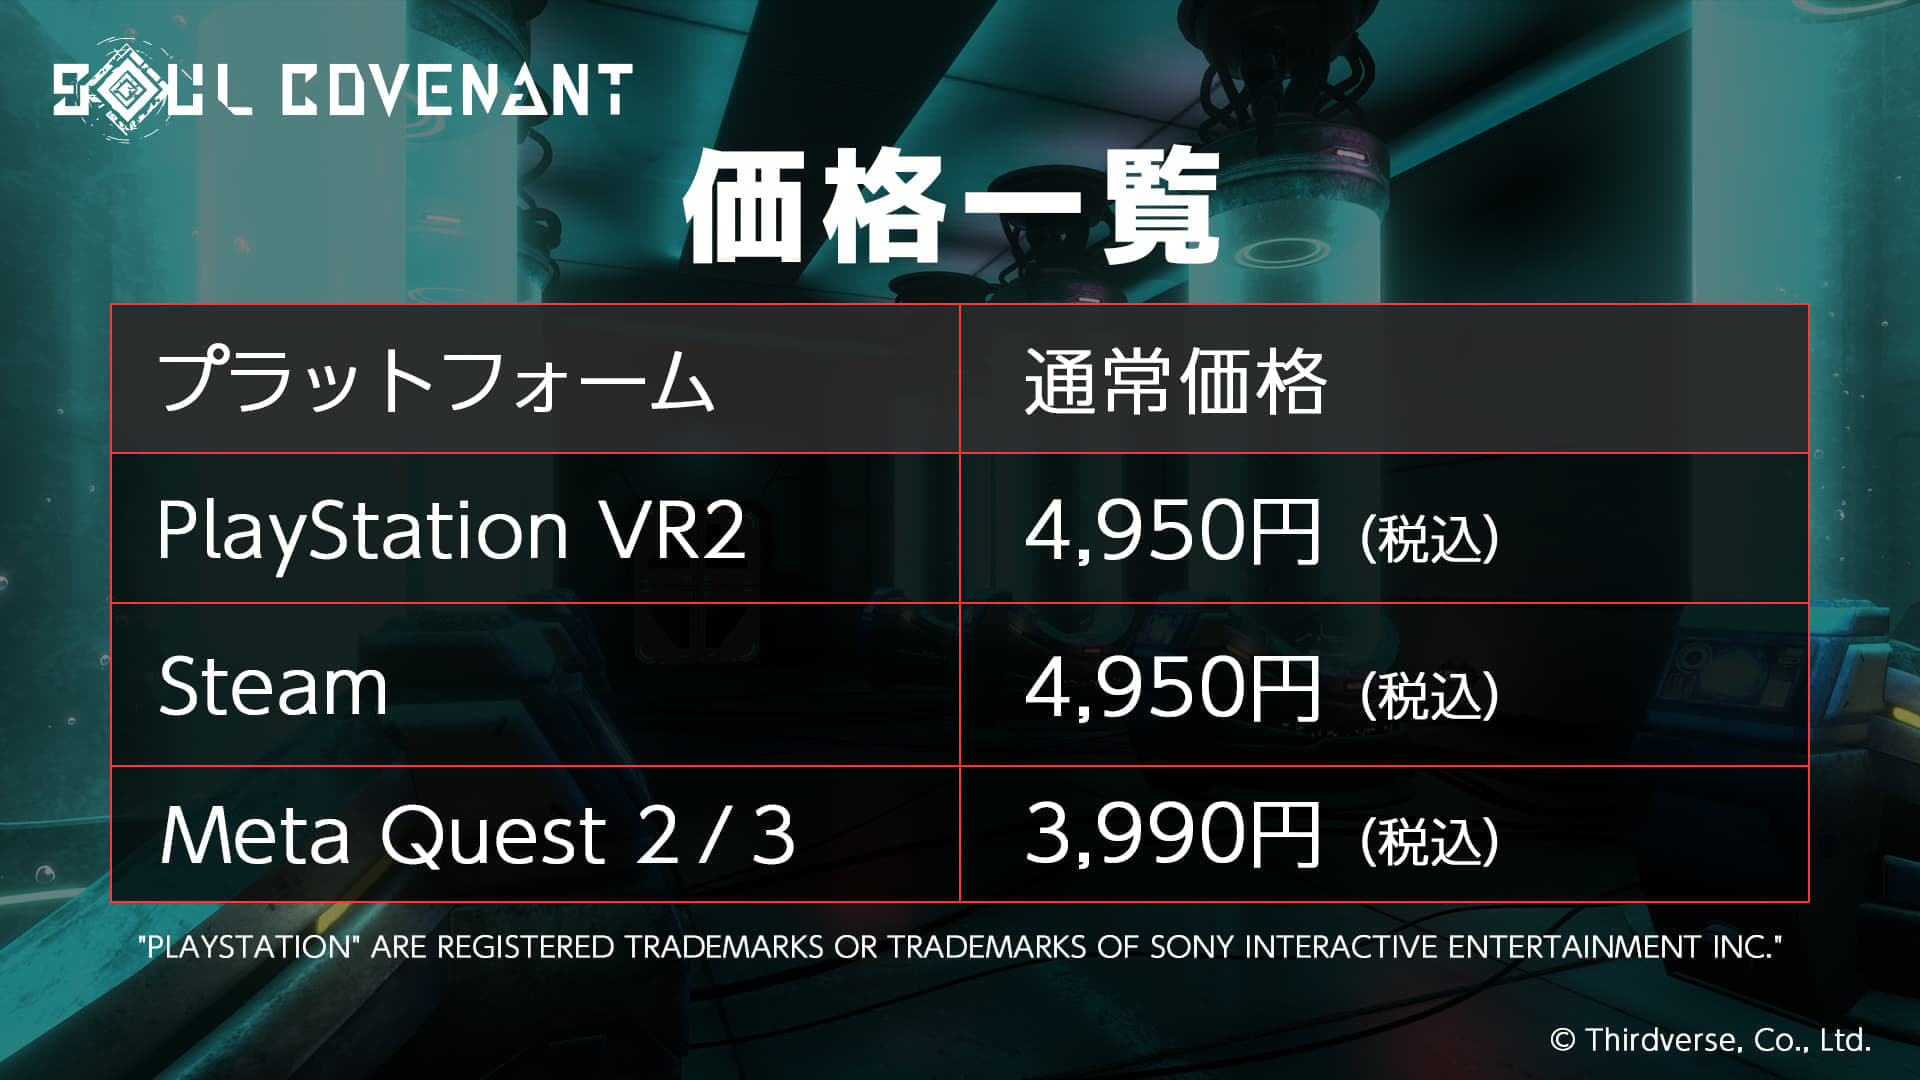 『SOULCOVENANT』発売。VRならではの「死の追体験」描くアクションゲーム、声優・木村良平さんによる先行プレイ動画も公開_005